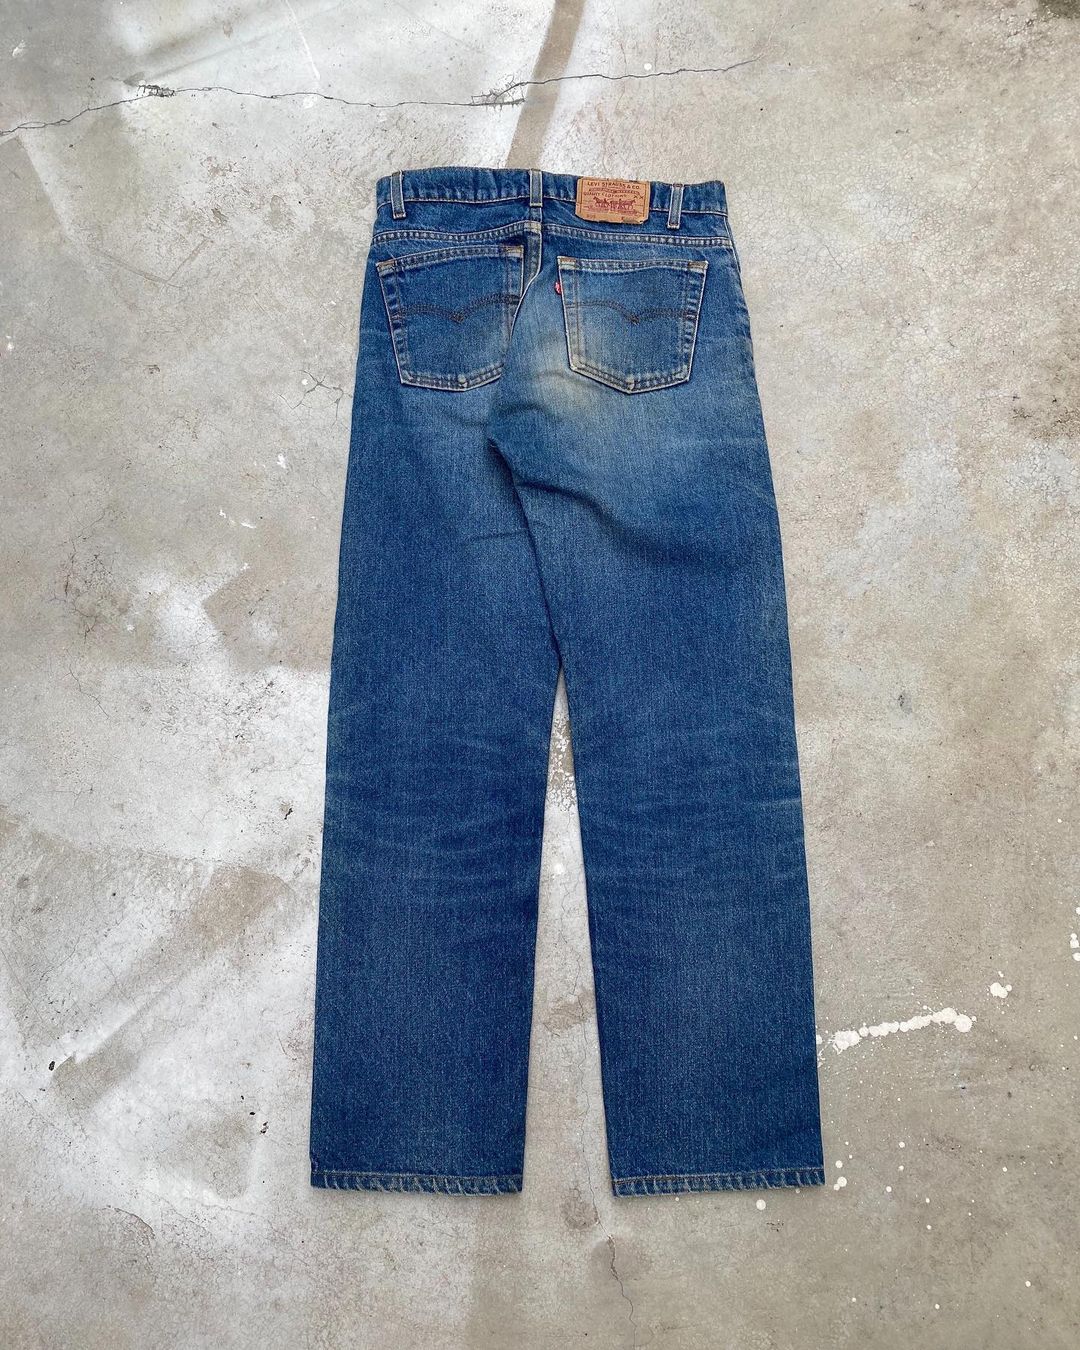 1980s Faded Indigo Levi’s 505 Jeans (31x34)